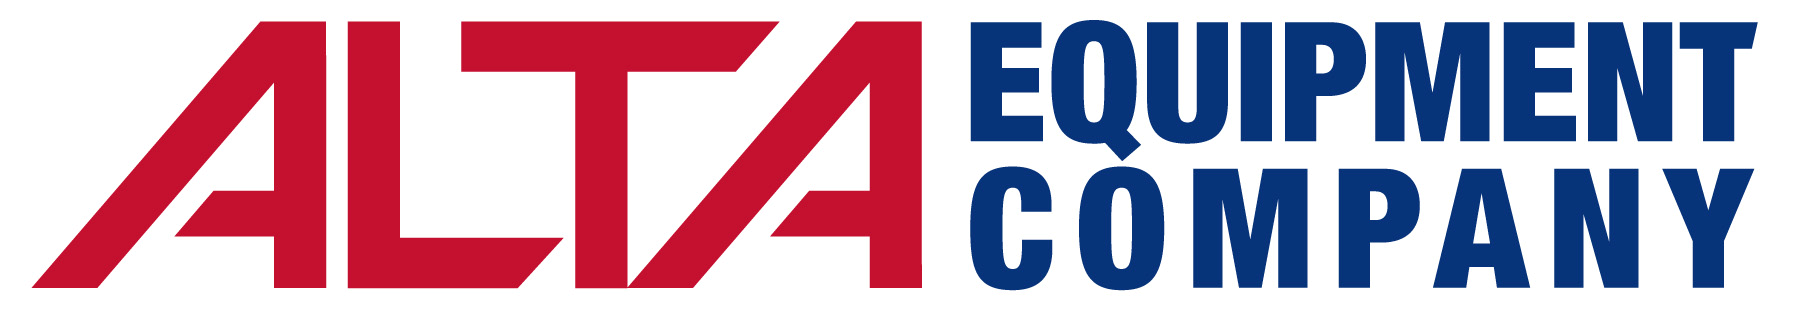 Alta Equipment Company logo